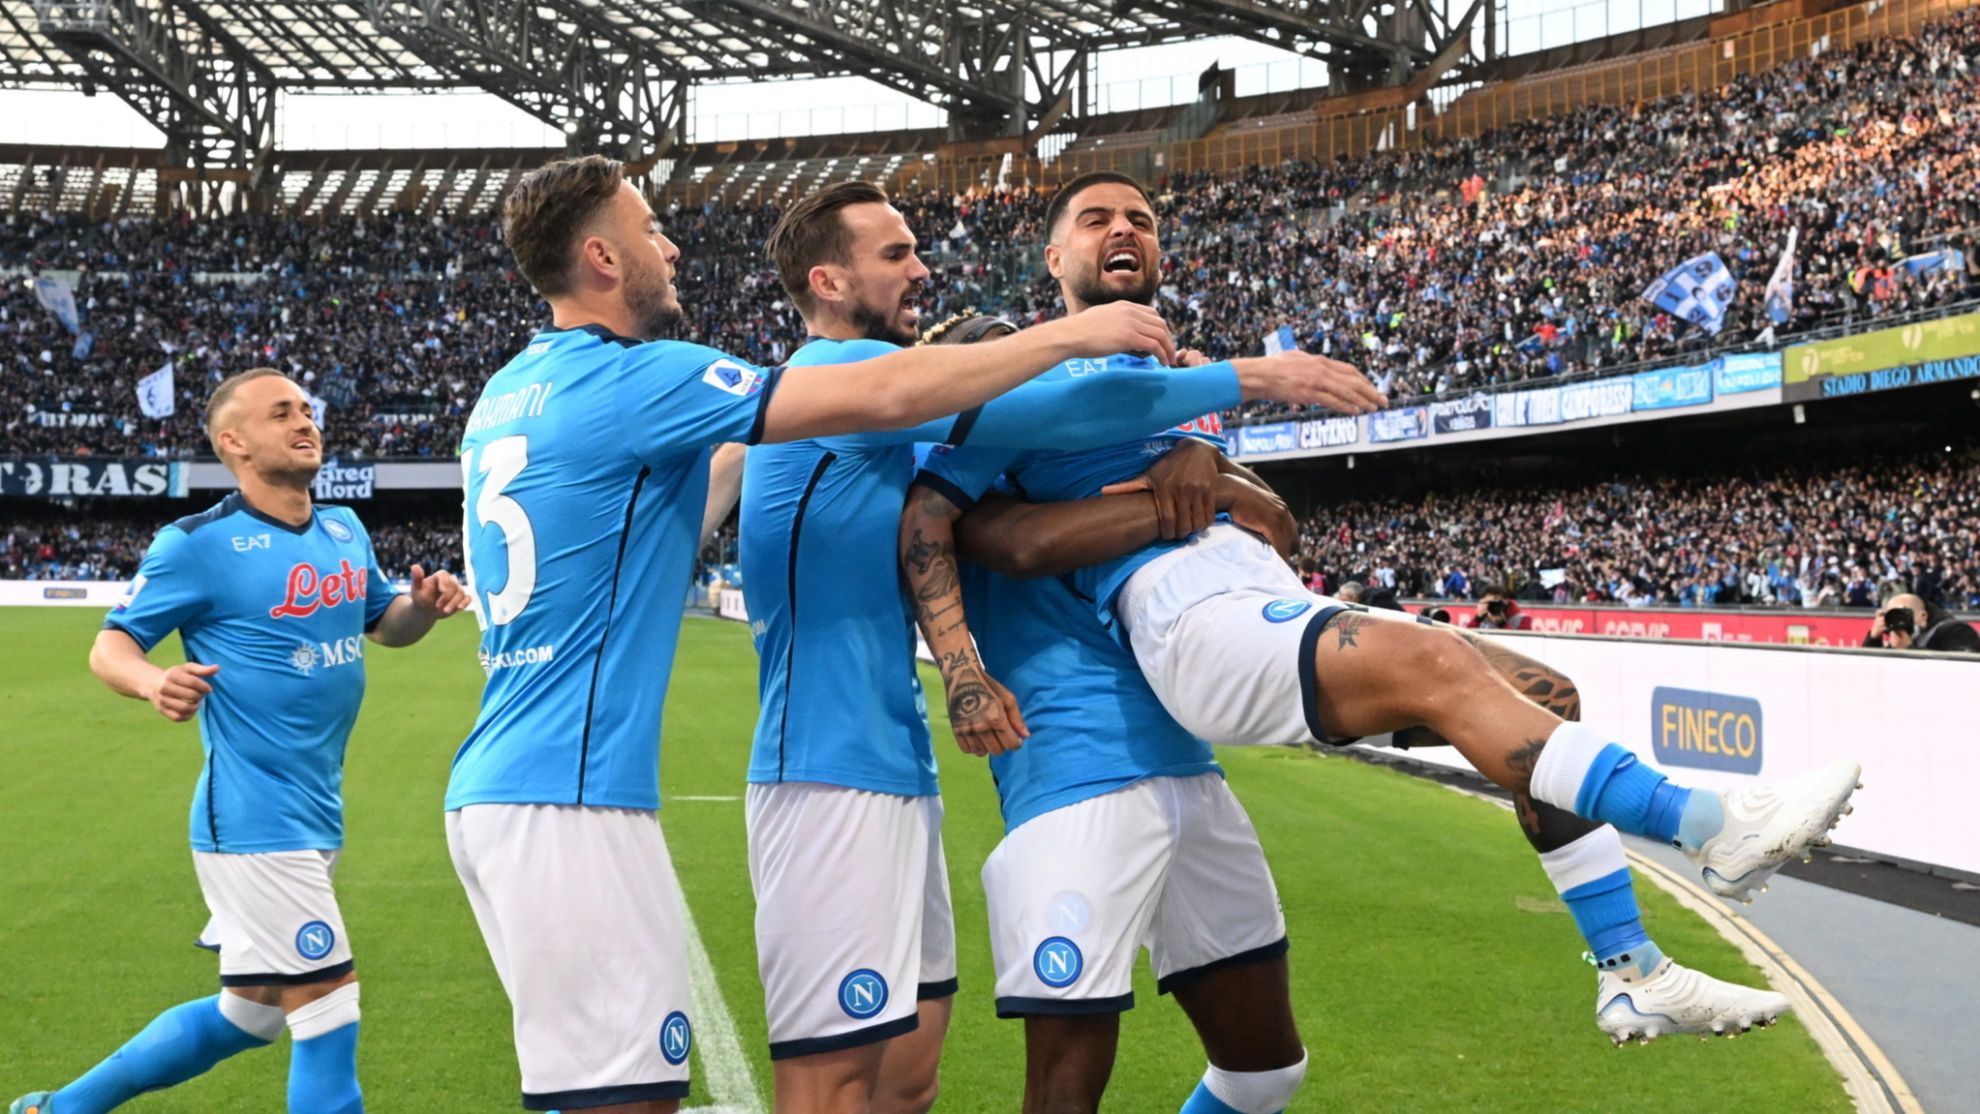 Napoli forward Lorenzo Insigne celebrates